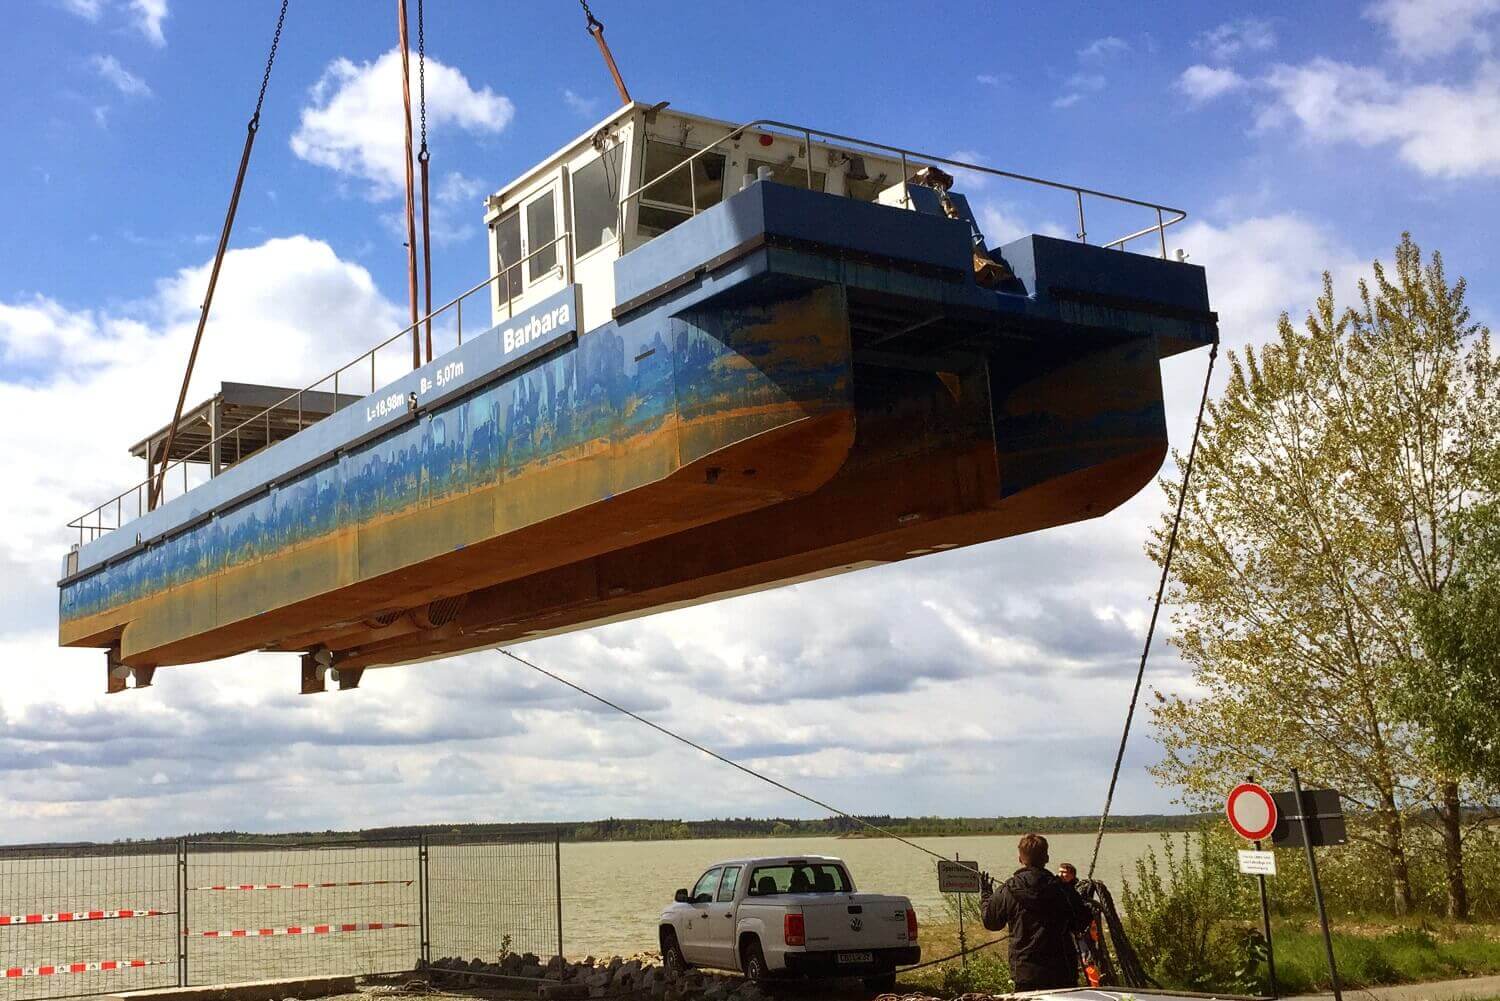 Lime ship Barbara ensures clean water in Lake Schlabendorf